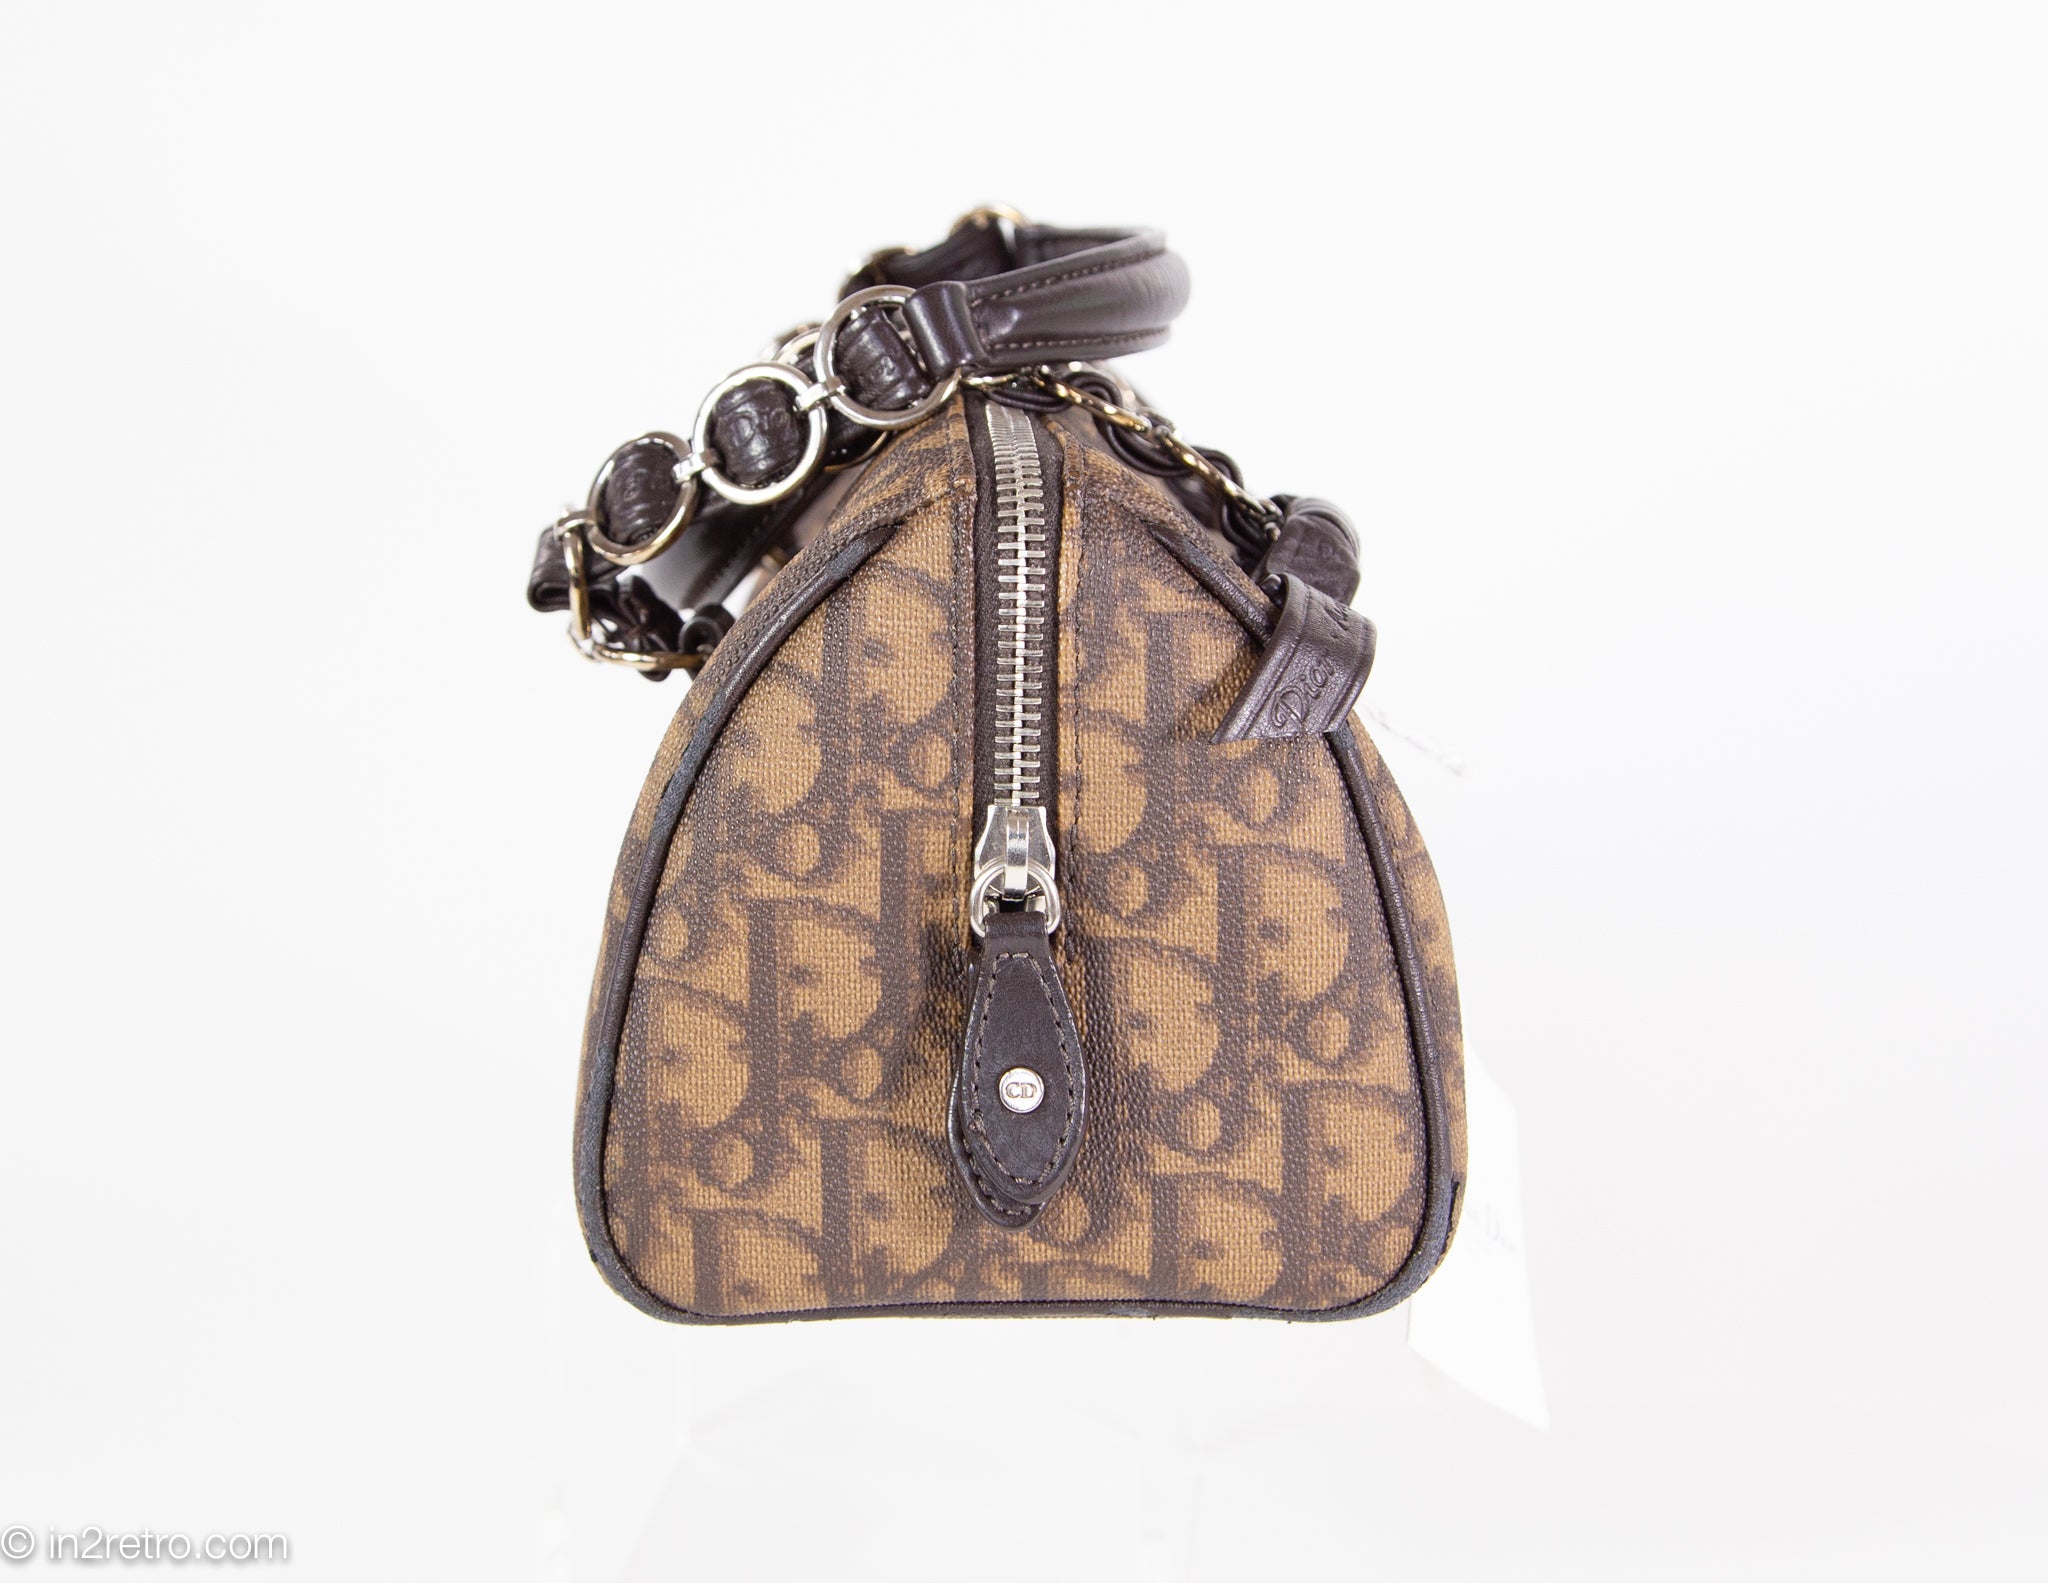 Dior Brown Trotter Monogram Print Bag Handbag Bow